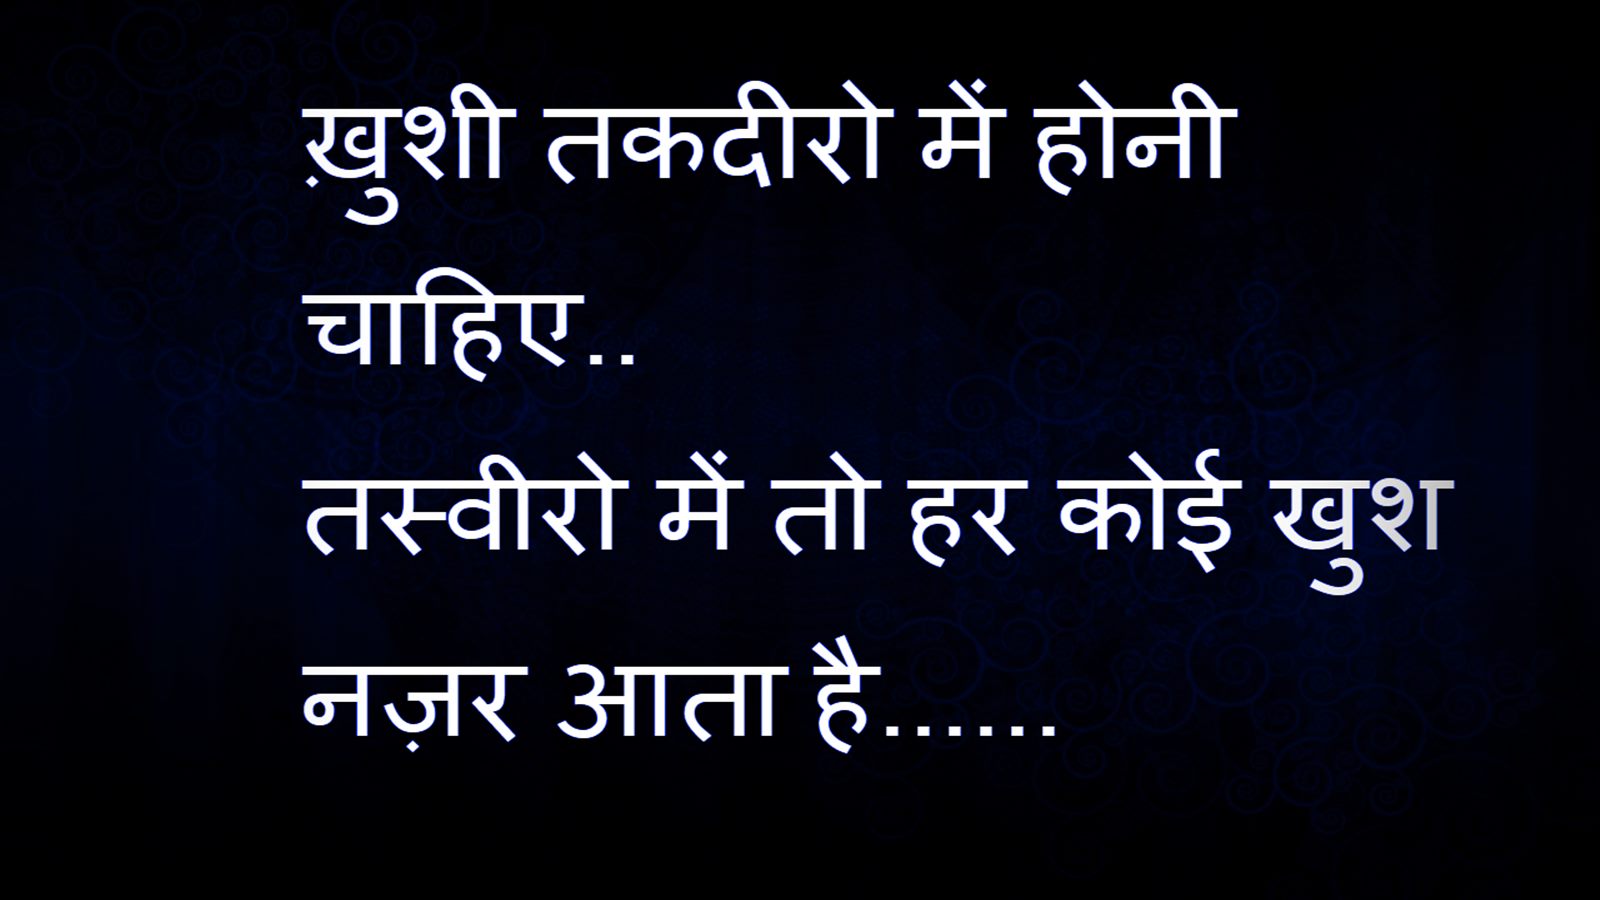 Hindi Status Quotes Hd Wallpaper - Kedarnath Temple , HD Wallpaper & Backgrounds